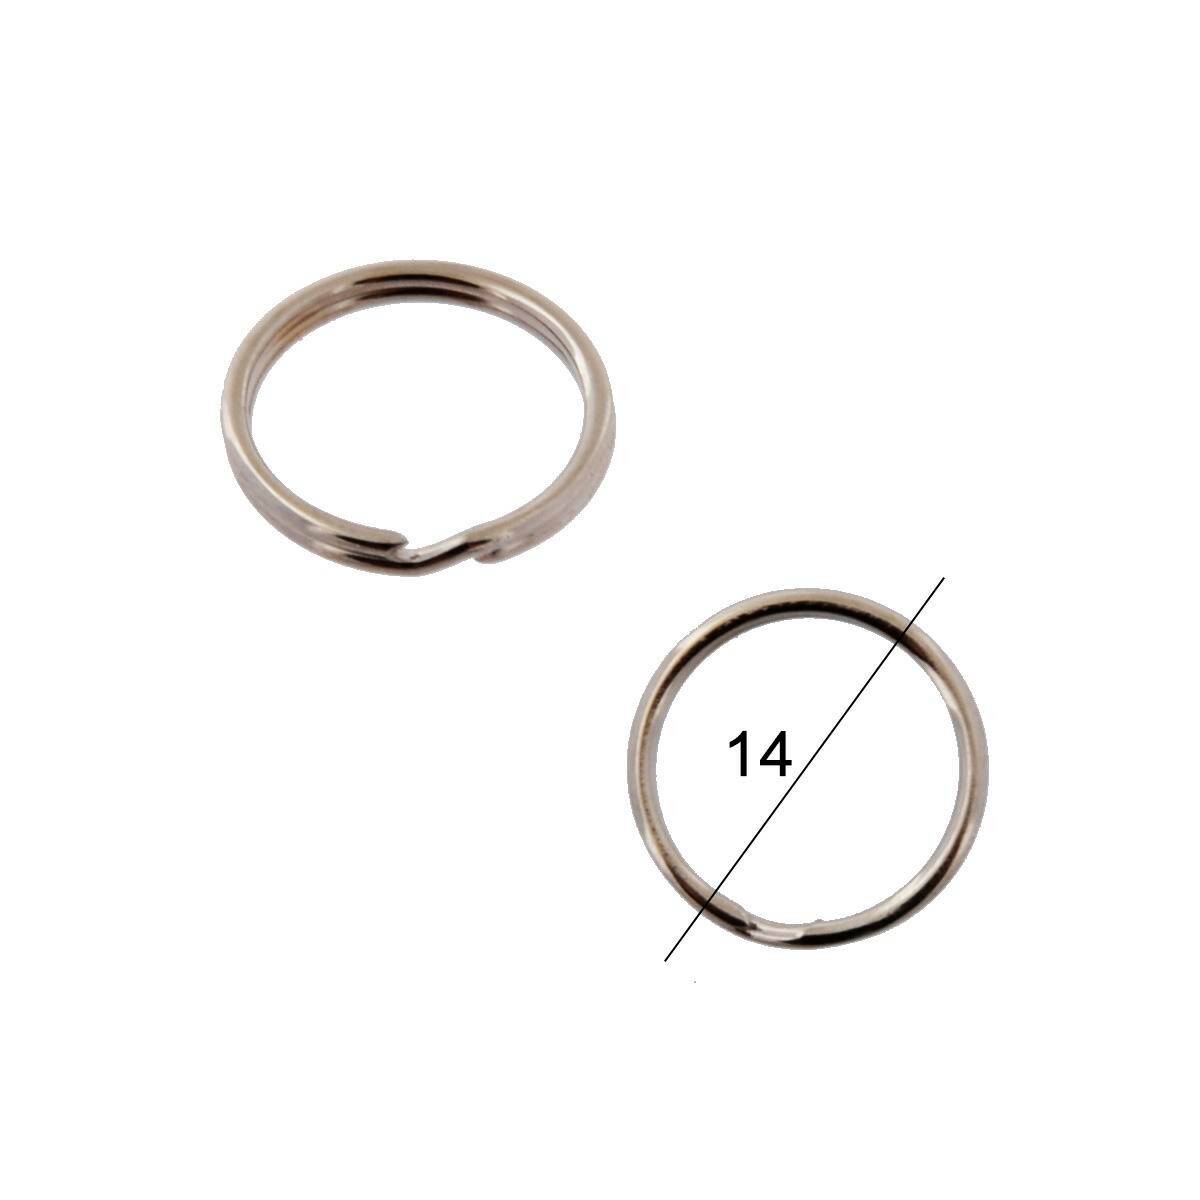 Key rings standard - diameter 14mm